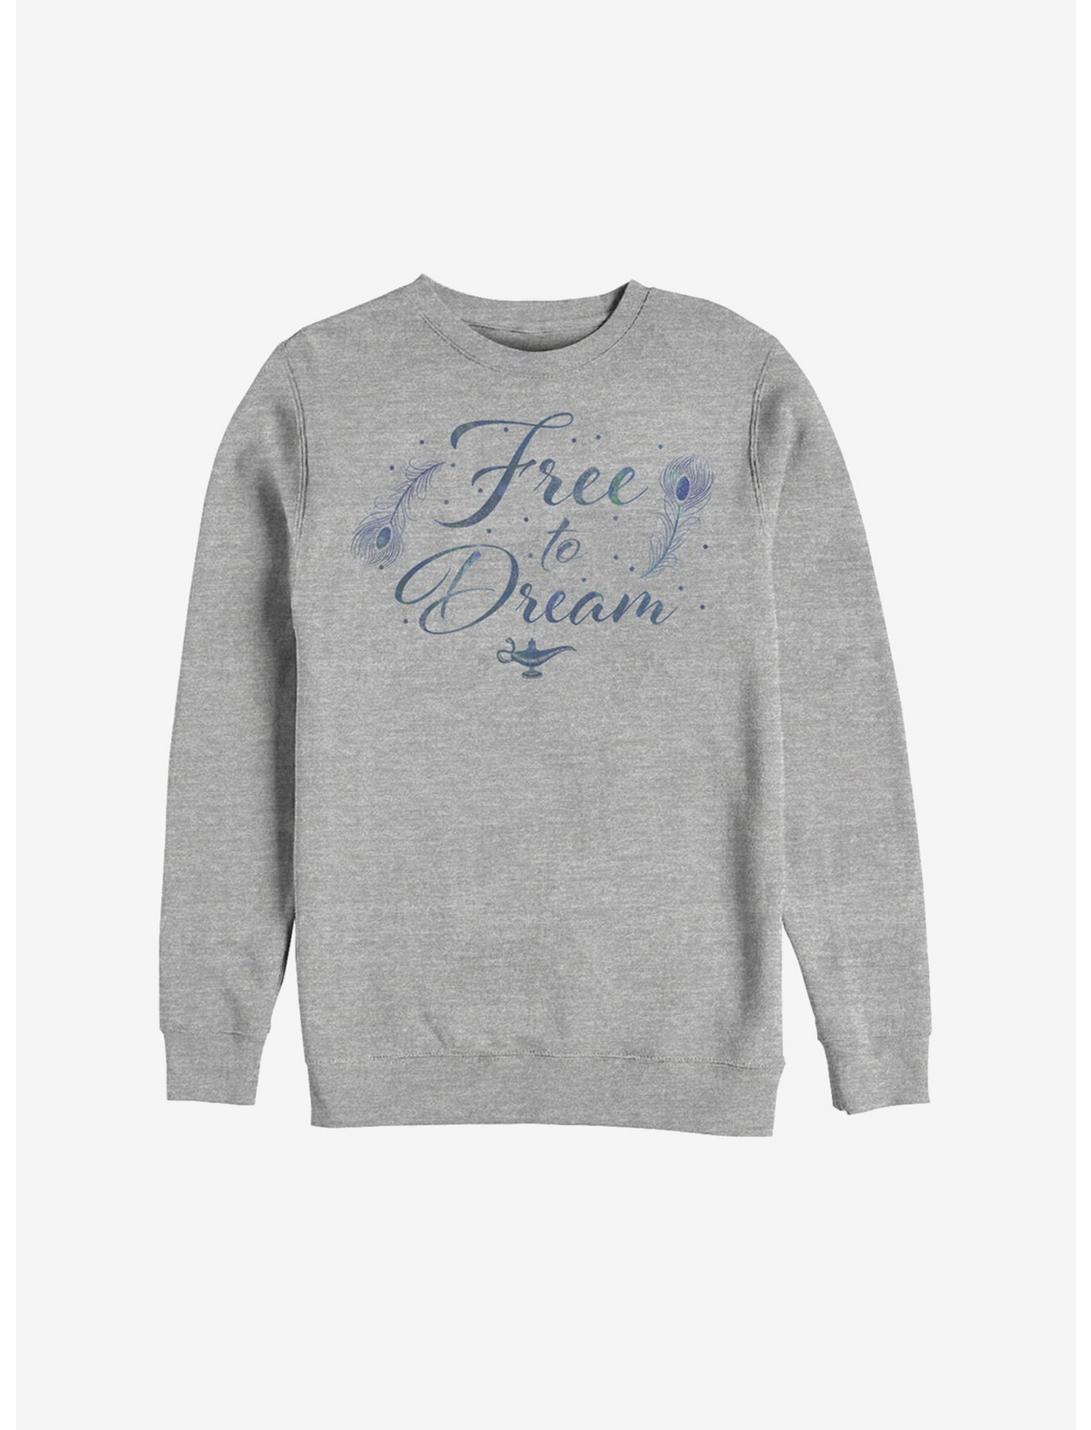 Disney Aladdin 2019 Free To Dream Sweatshirt, ATH HTR, hi-res